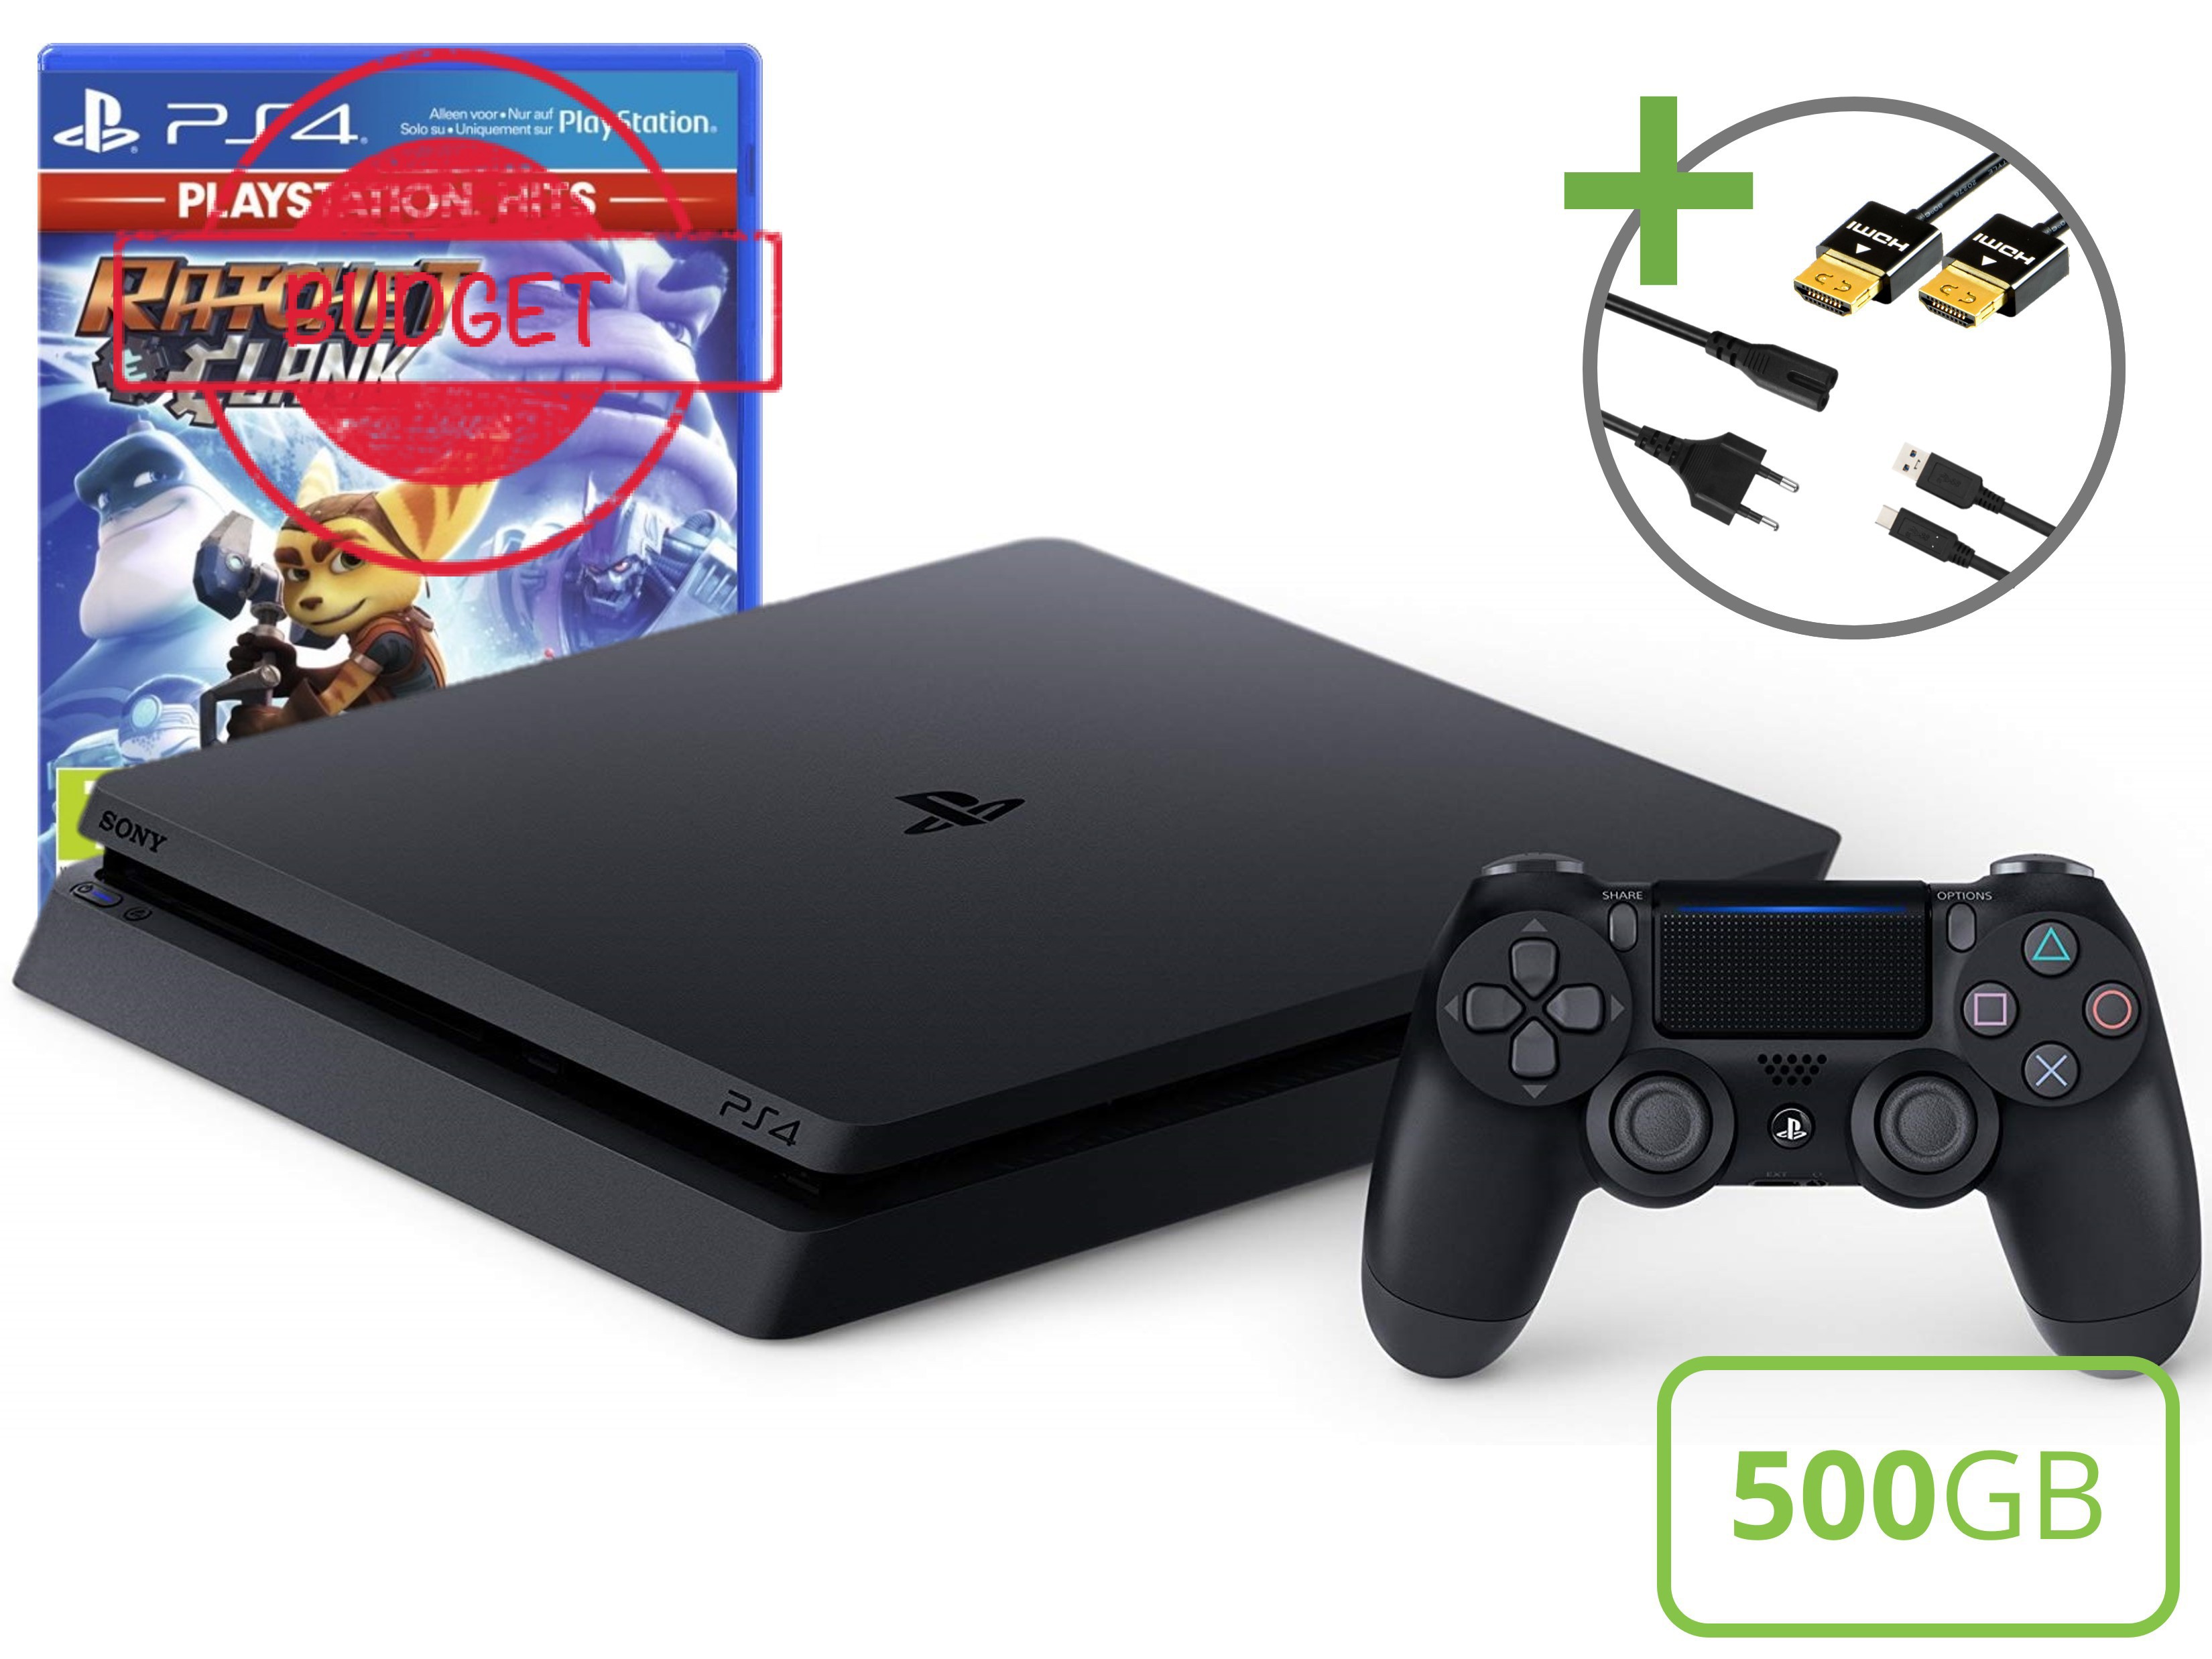 Sony PlayStation 4 Slim Starter Pack - 500GB Ratchet & Clank Edition - Budget - Playstation 4 Hardware